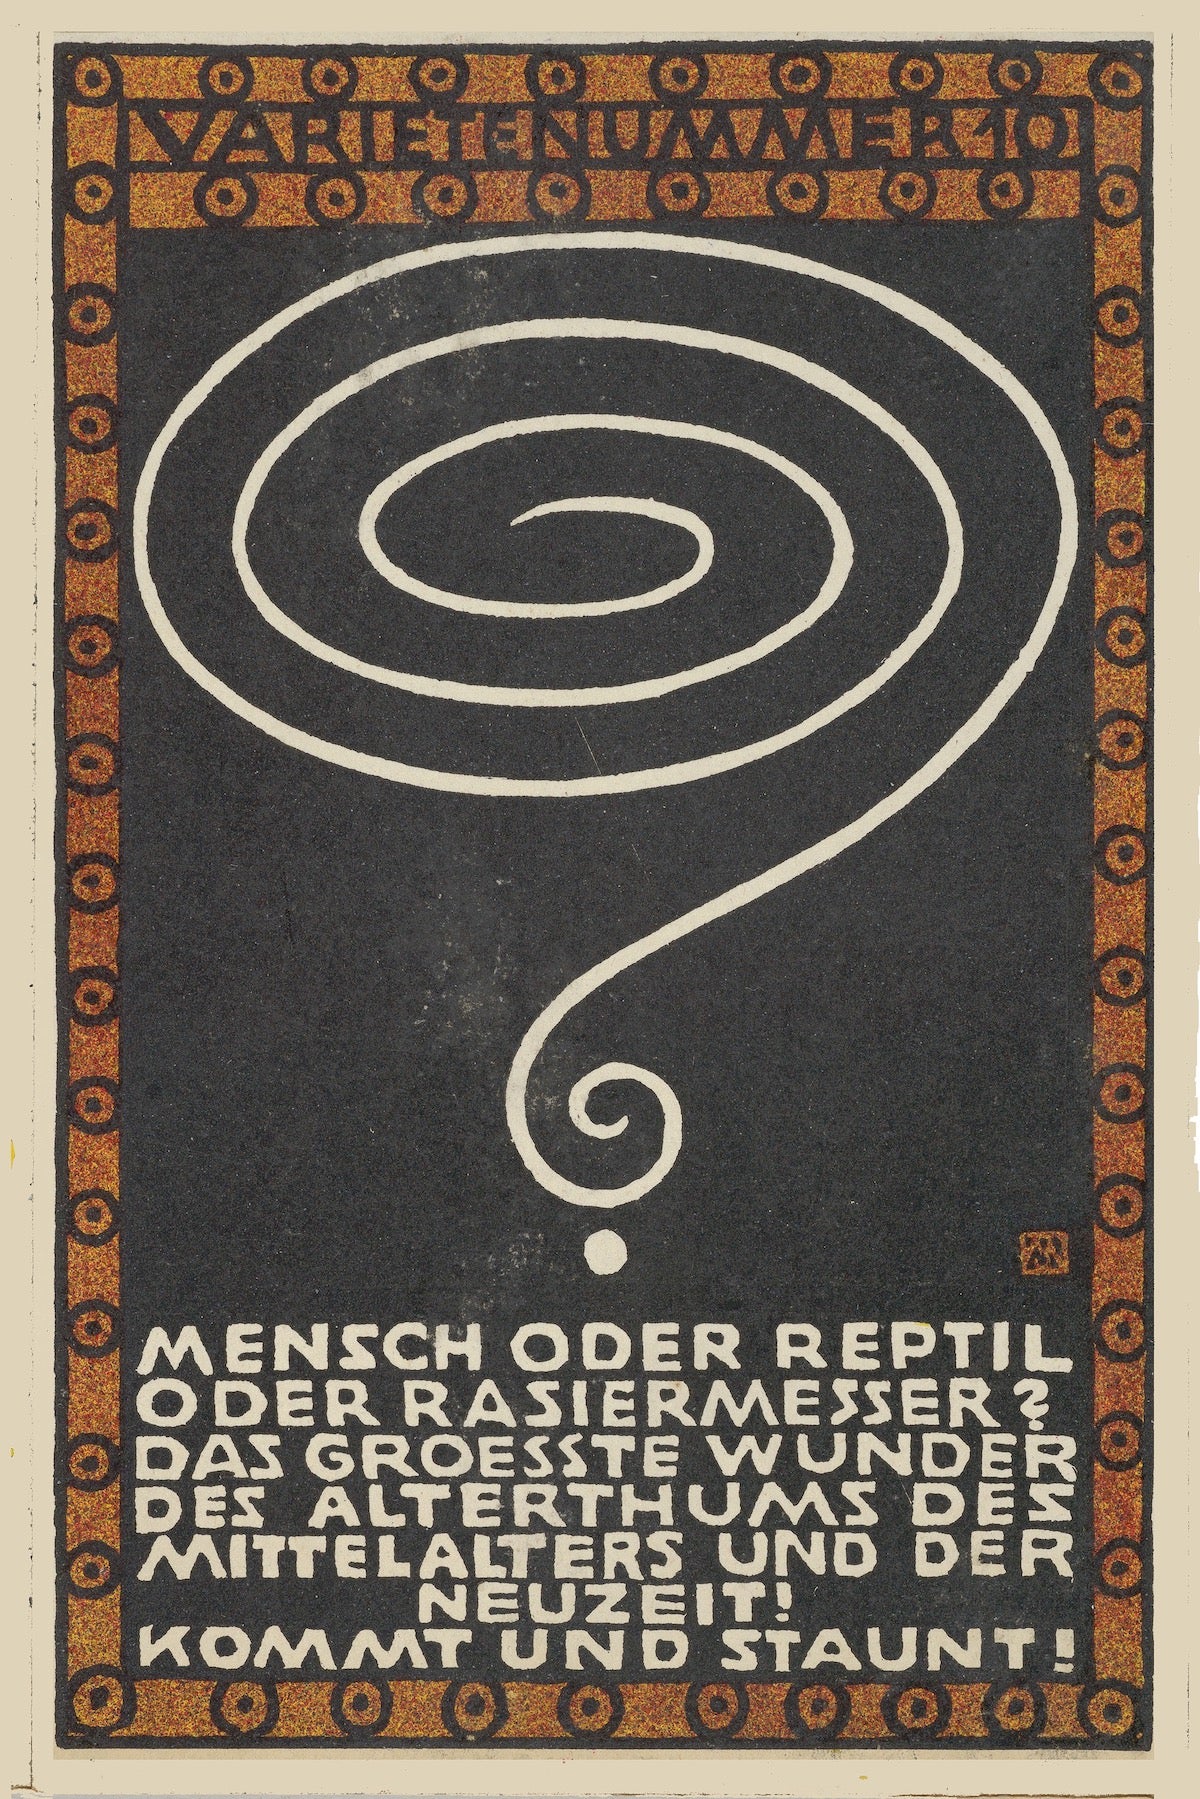 Variety Act 10 - Man or Reptile or Razor (Varietenummer 10 Mensch oder Reptil oder Rasiermesser) by Moriz Jung, 1907 - Postcard